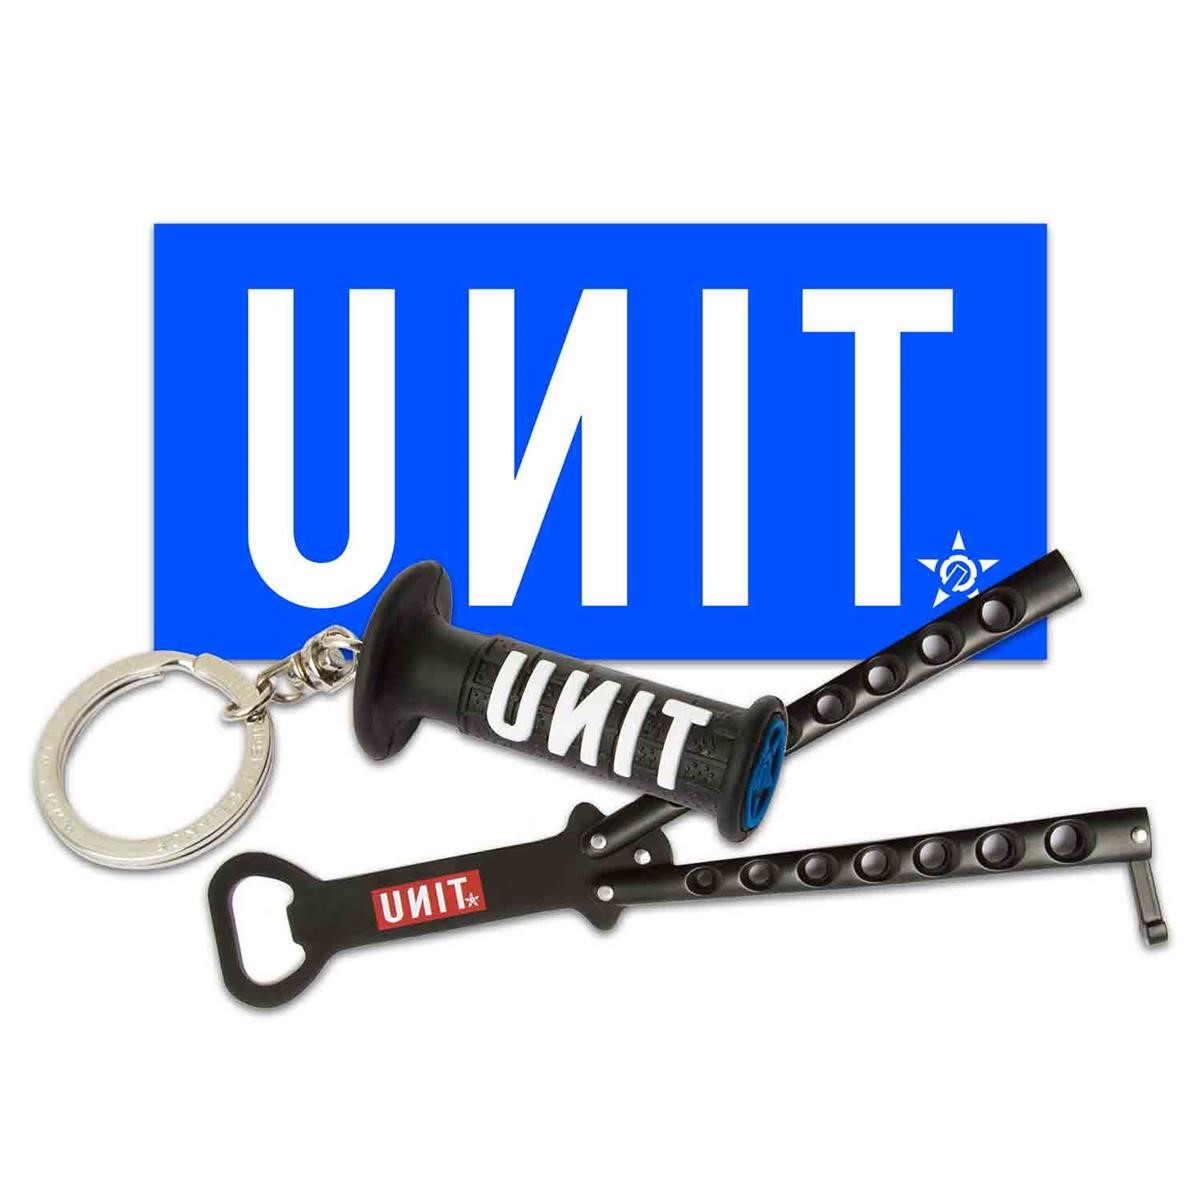 Unit Bundle-Offer Unit Van Sticker + Unit Flick Apribottiglie + Unit Riavvia il portachiavi dell'acceleratore